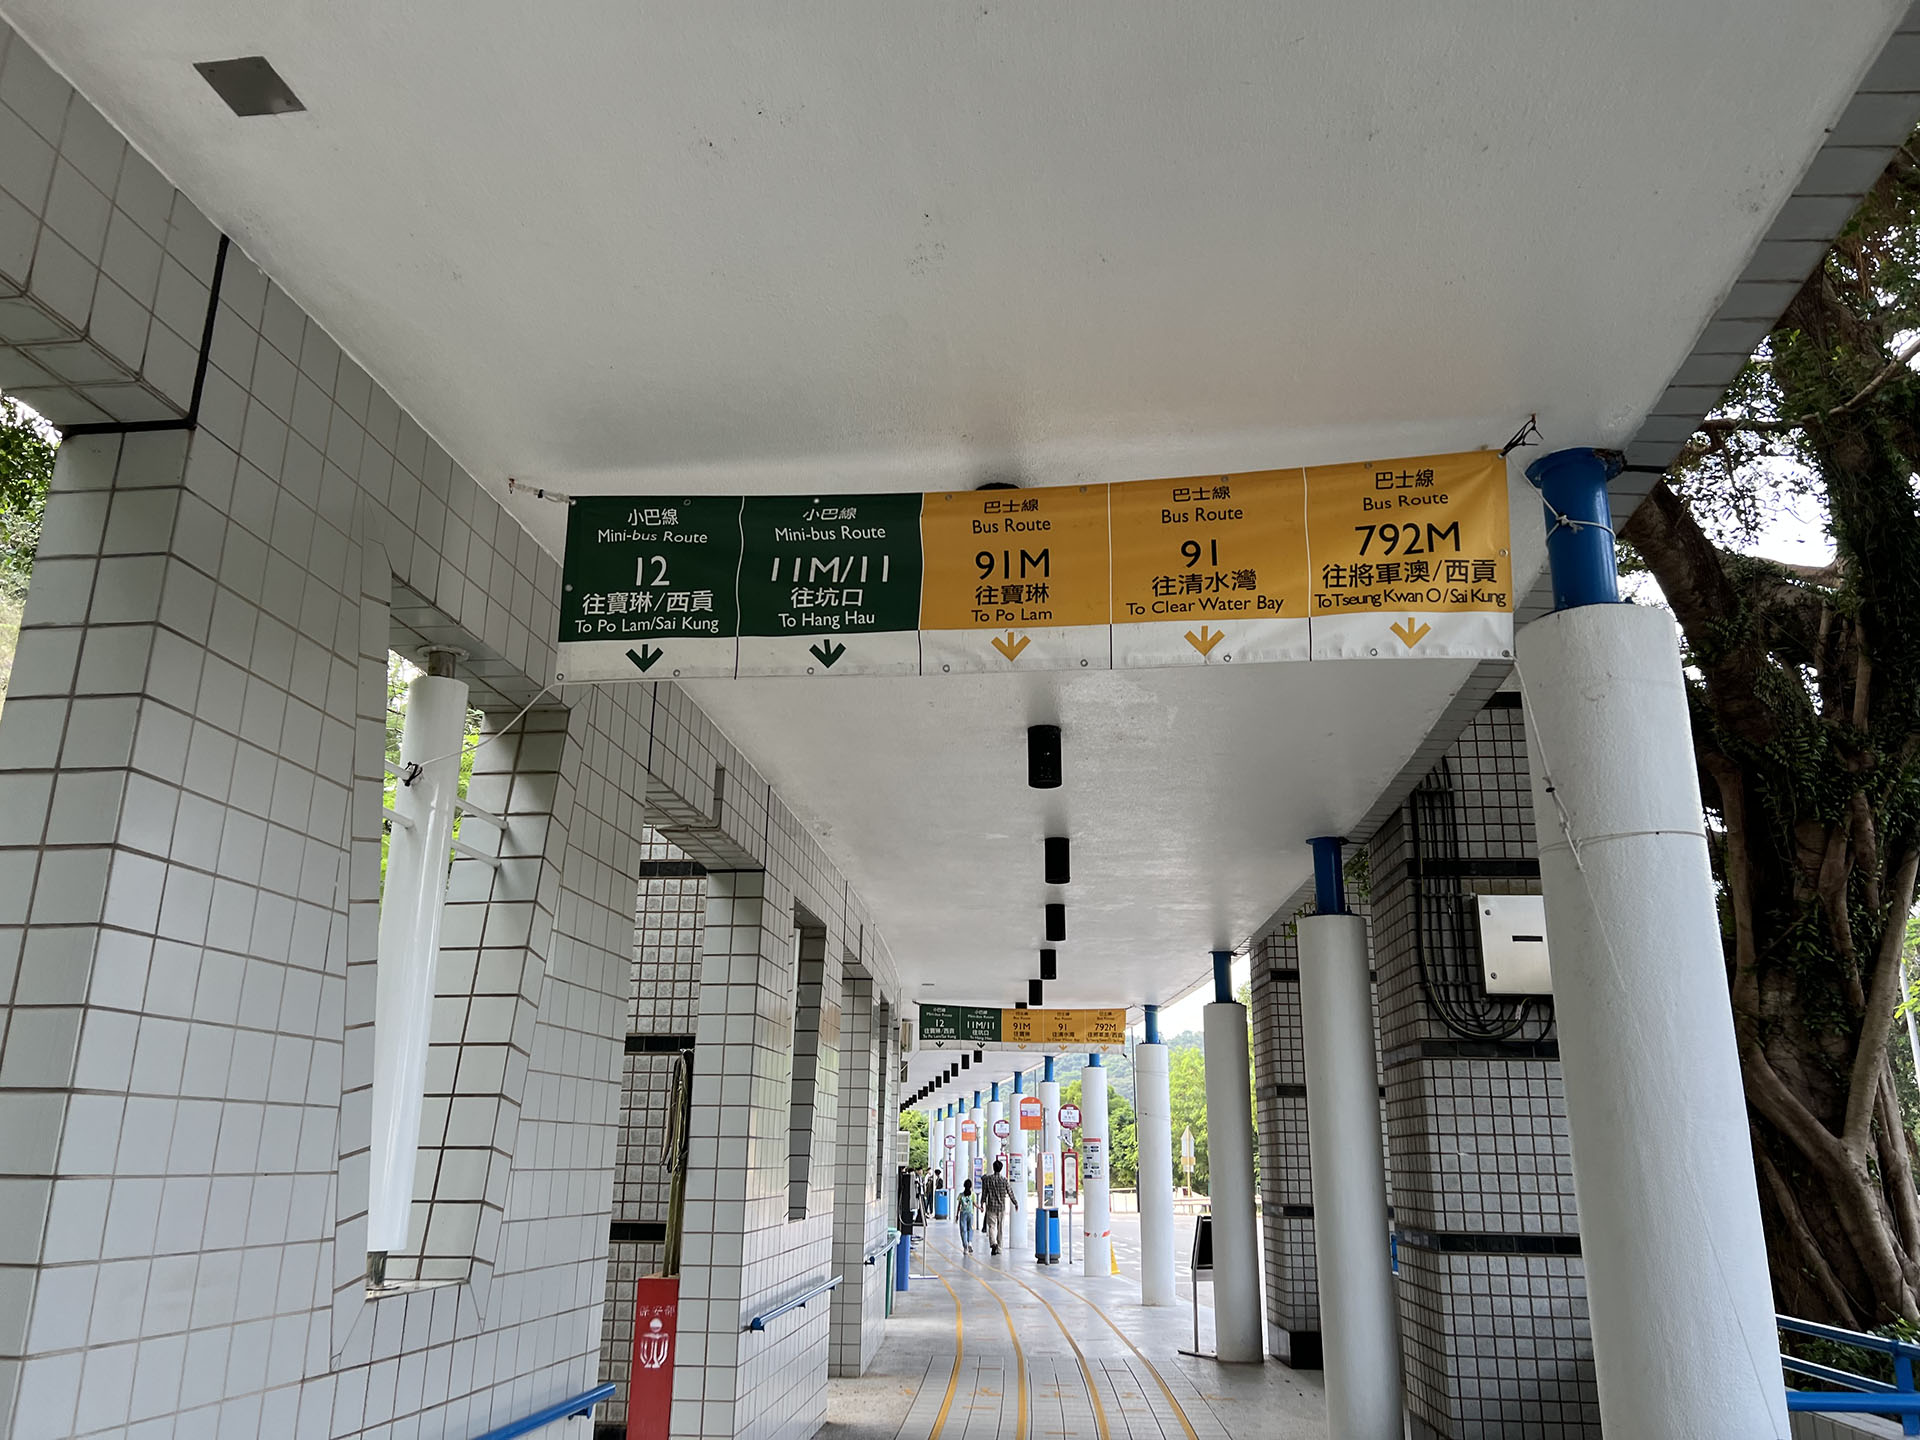 North Bus Station Destination Signs